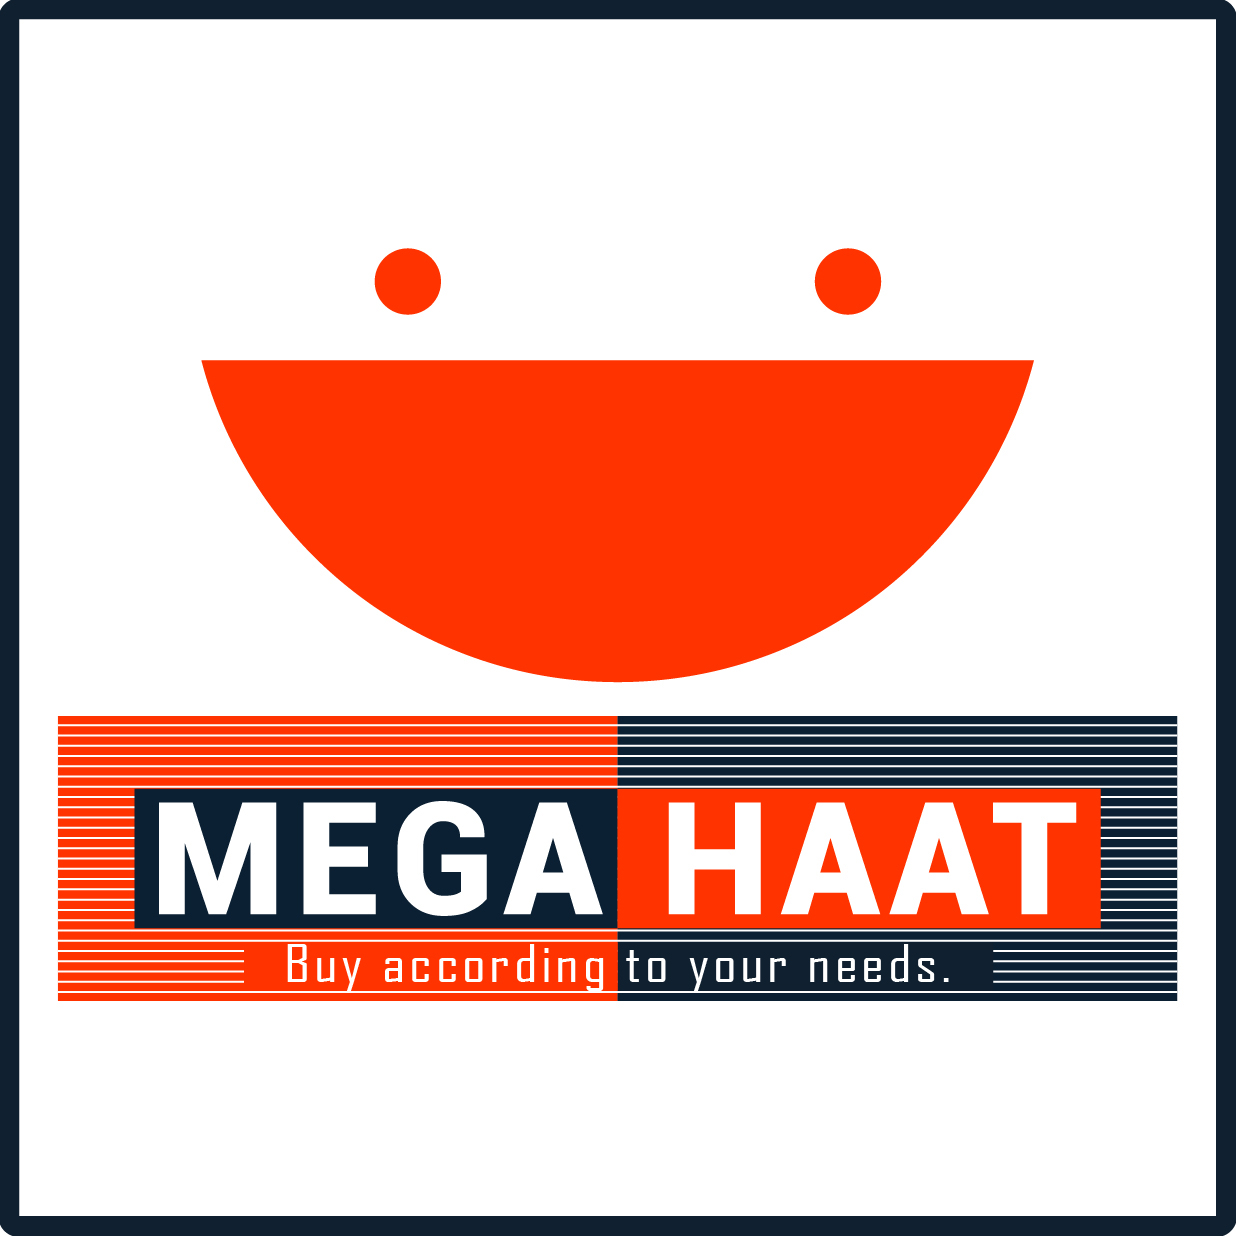 MegaHaat